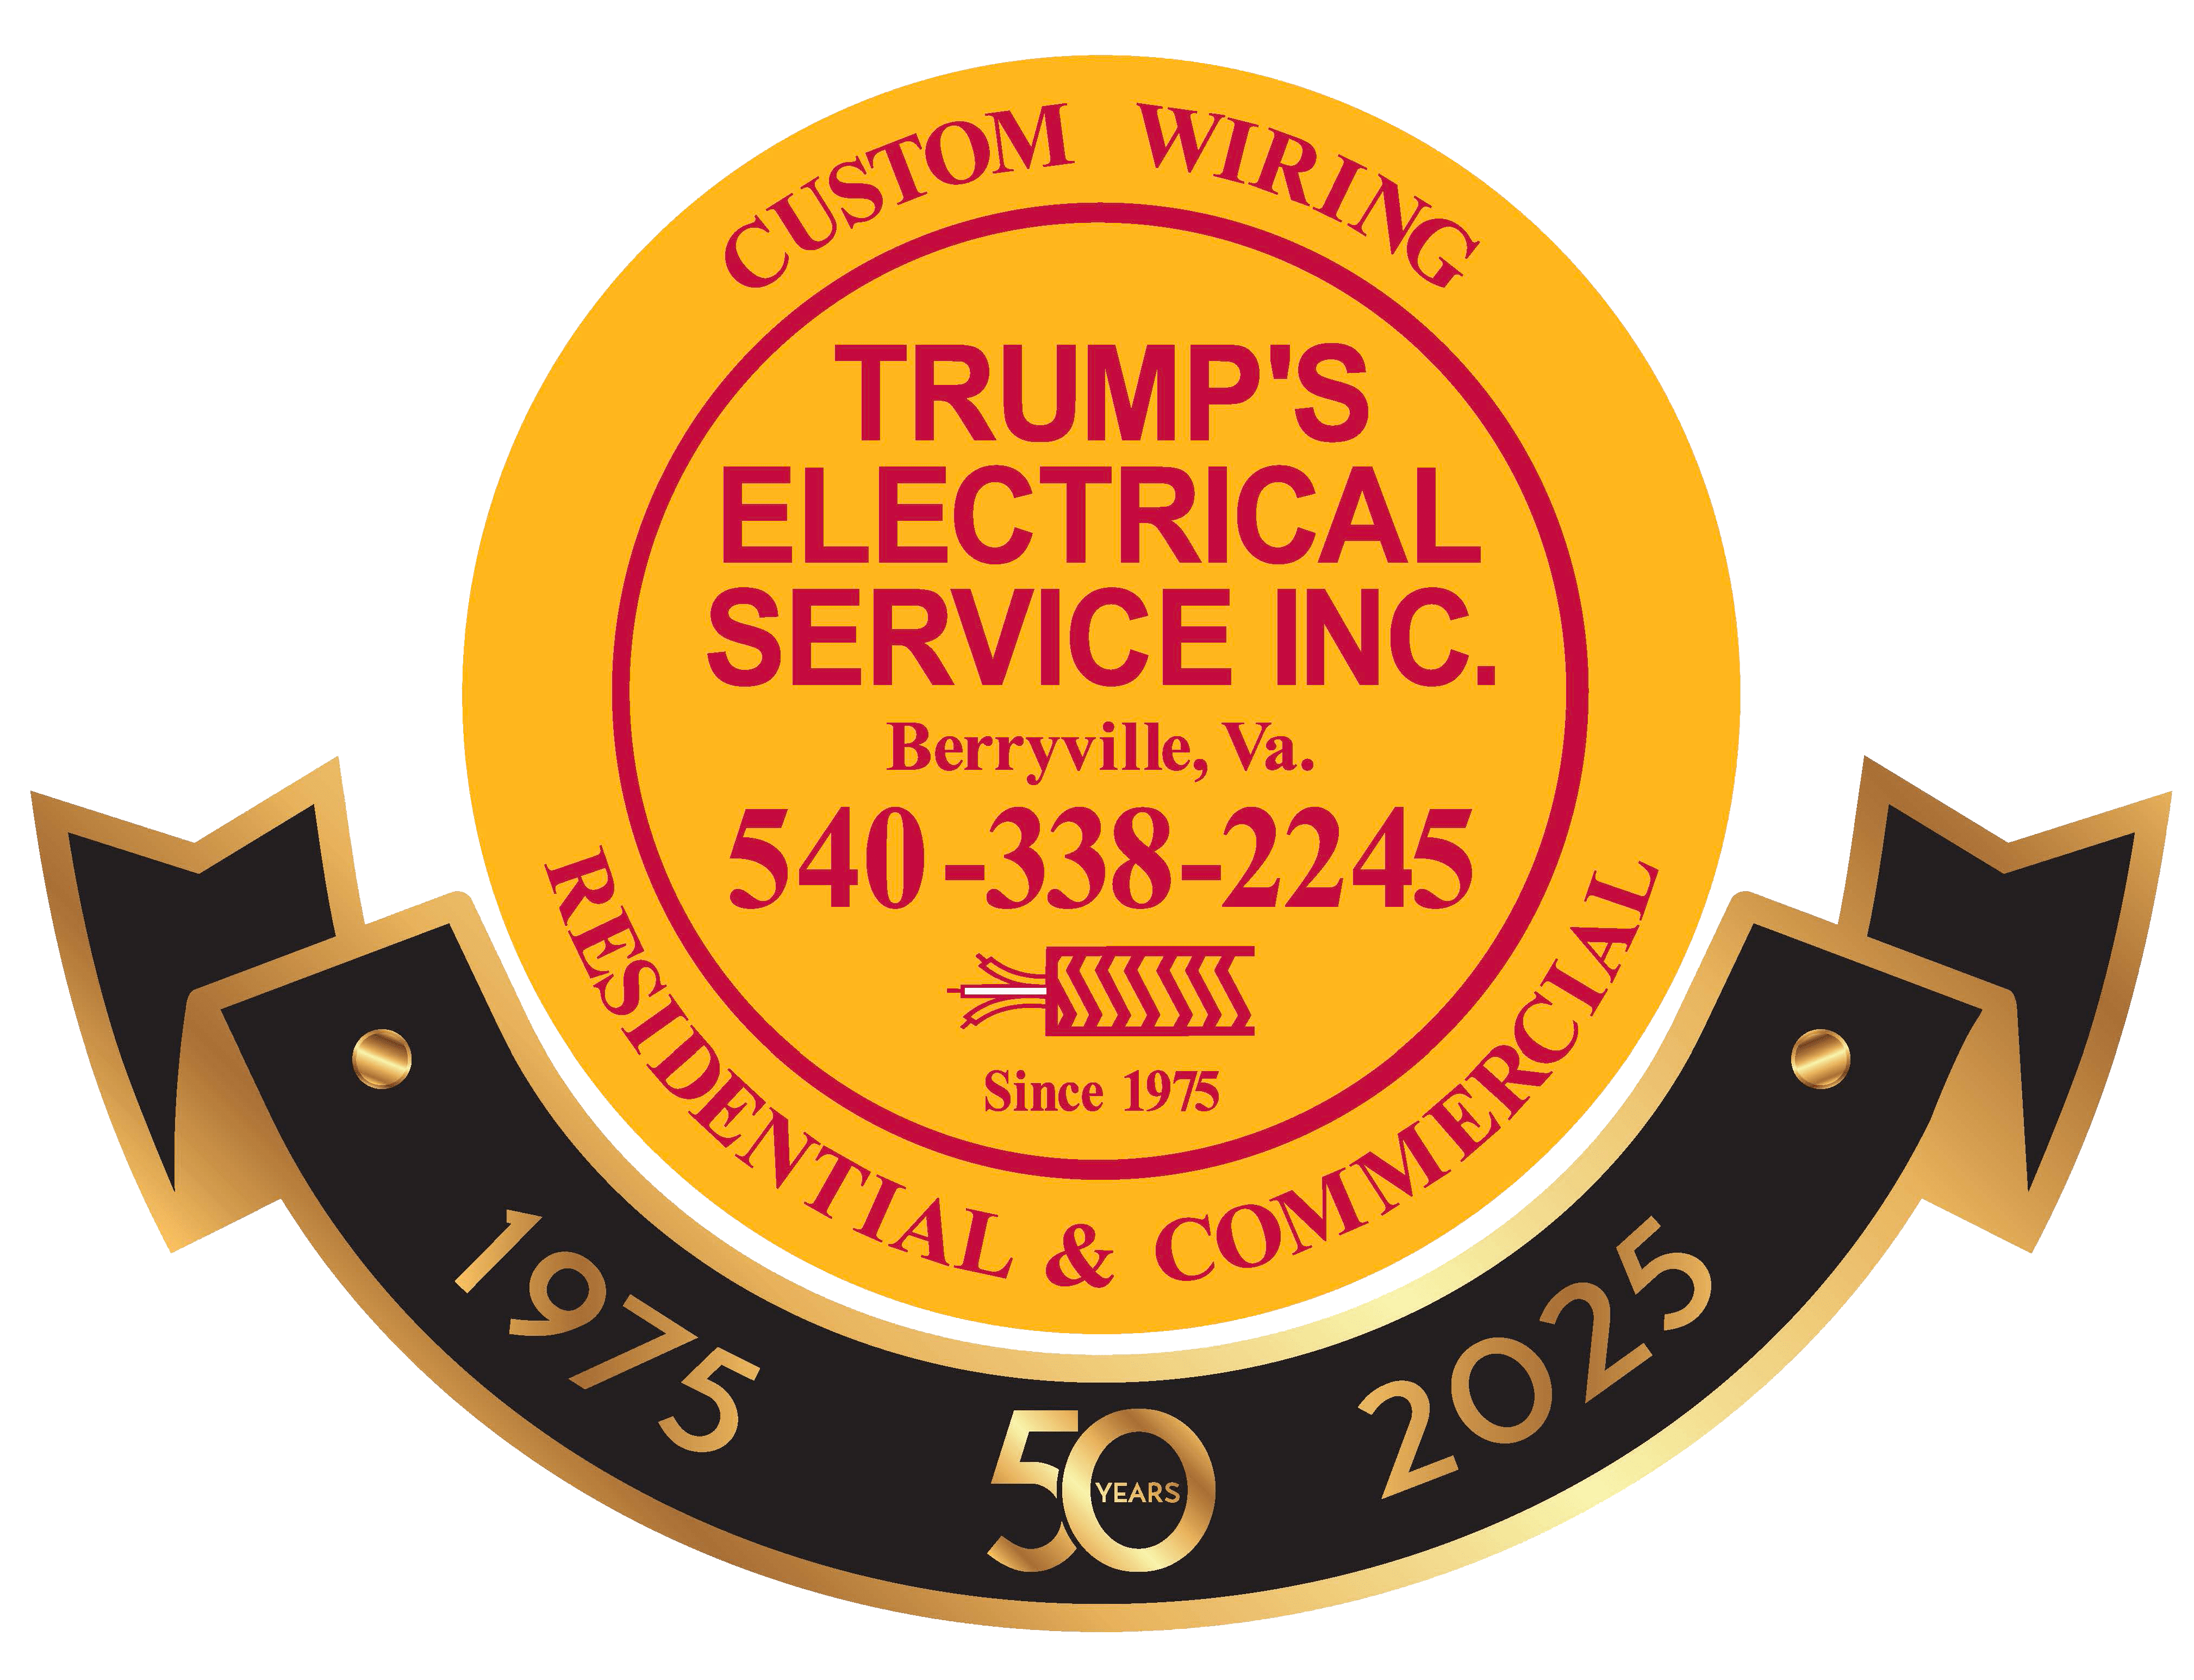 Trump’s Electrical Service, INC.